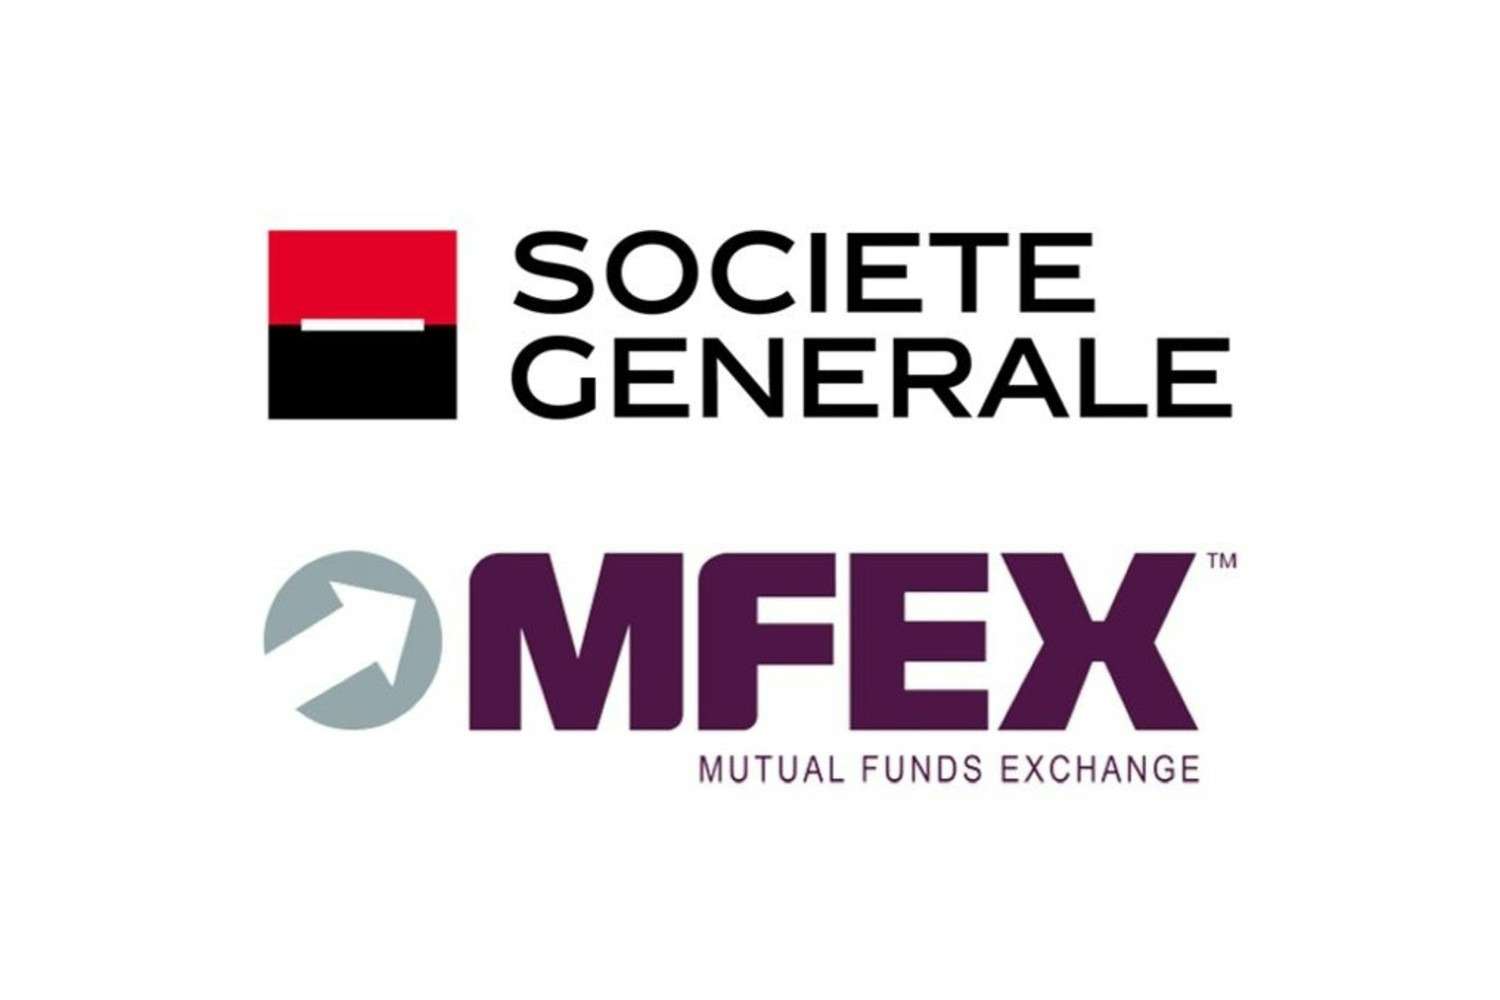 Société Générale and MFEX together for international fund distribution services